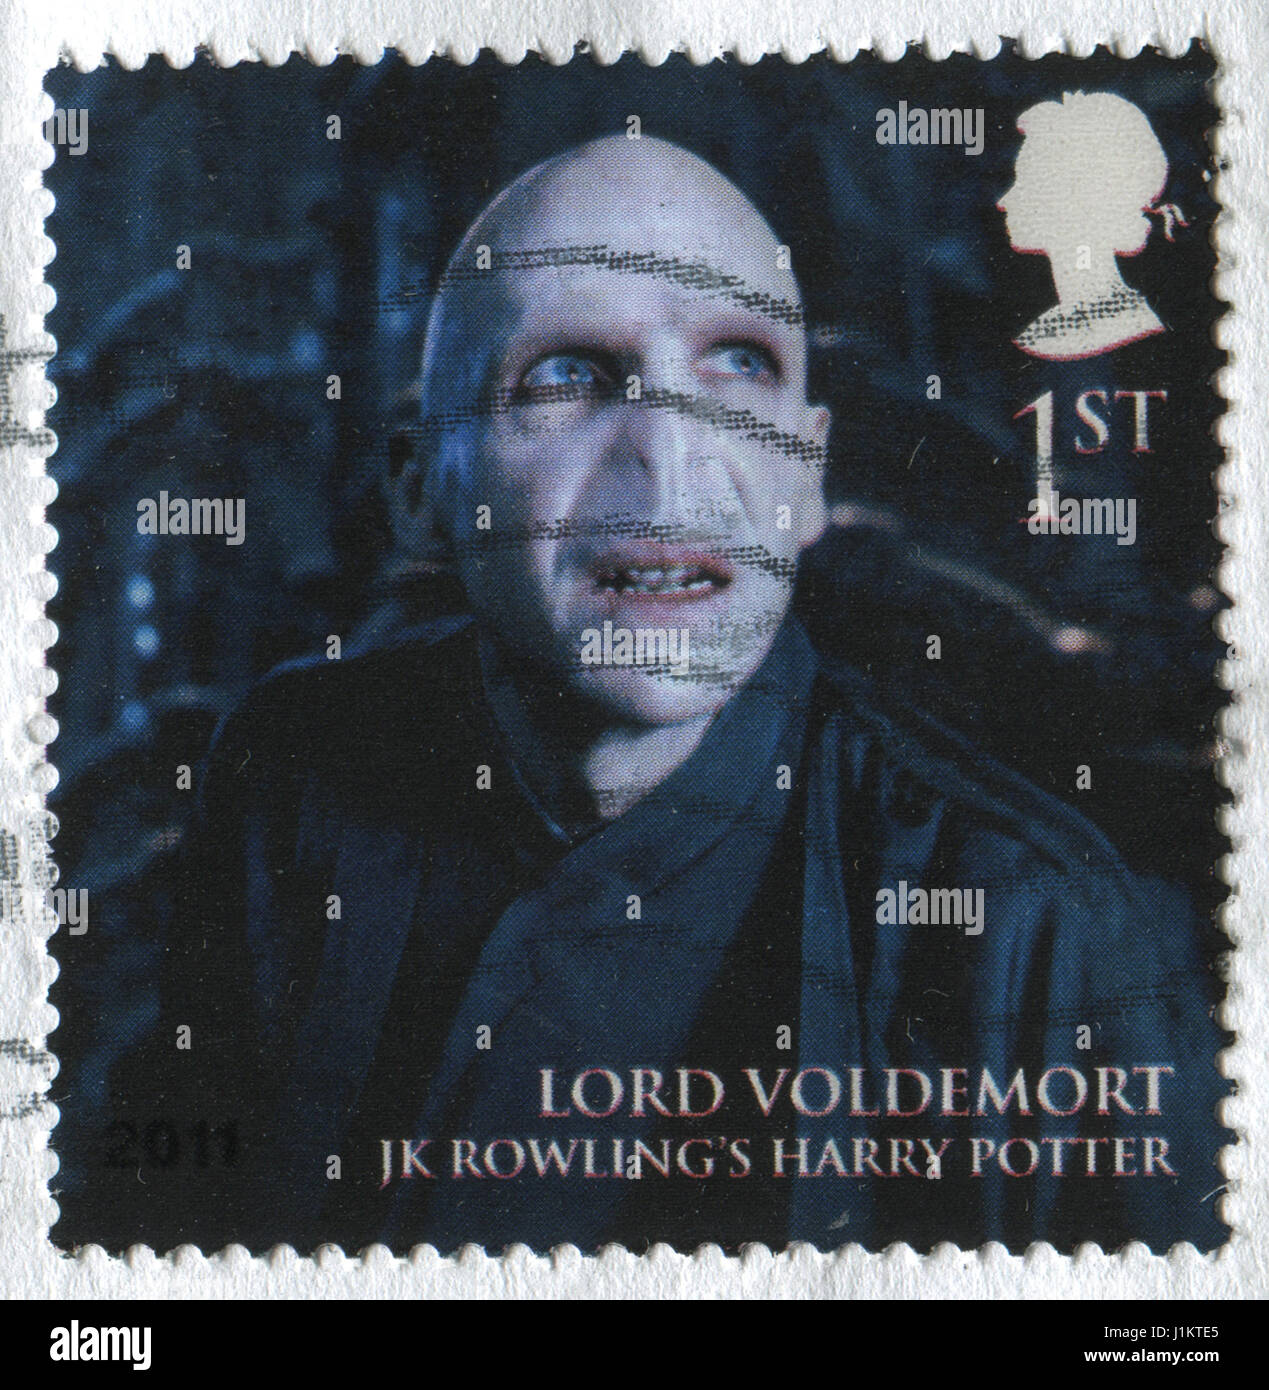 Lord Voldemort - image #3006891 on